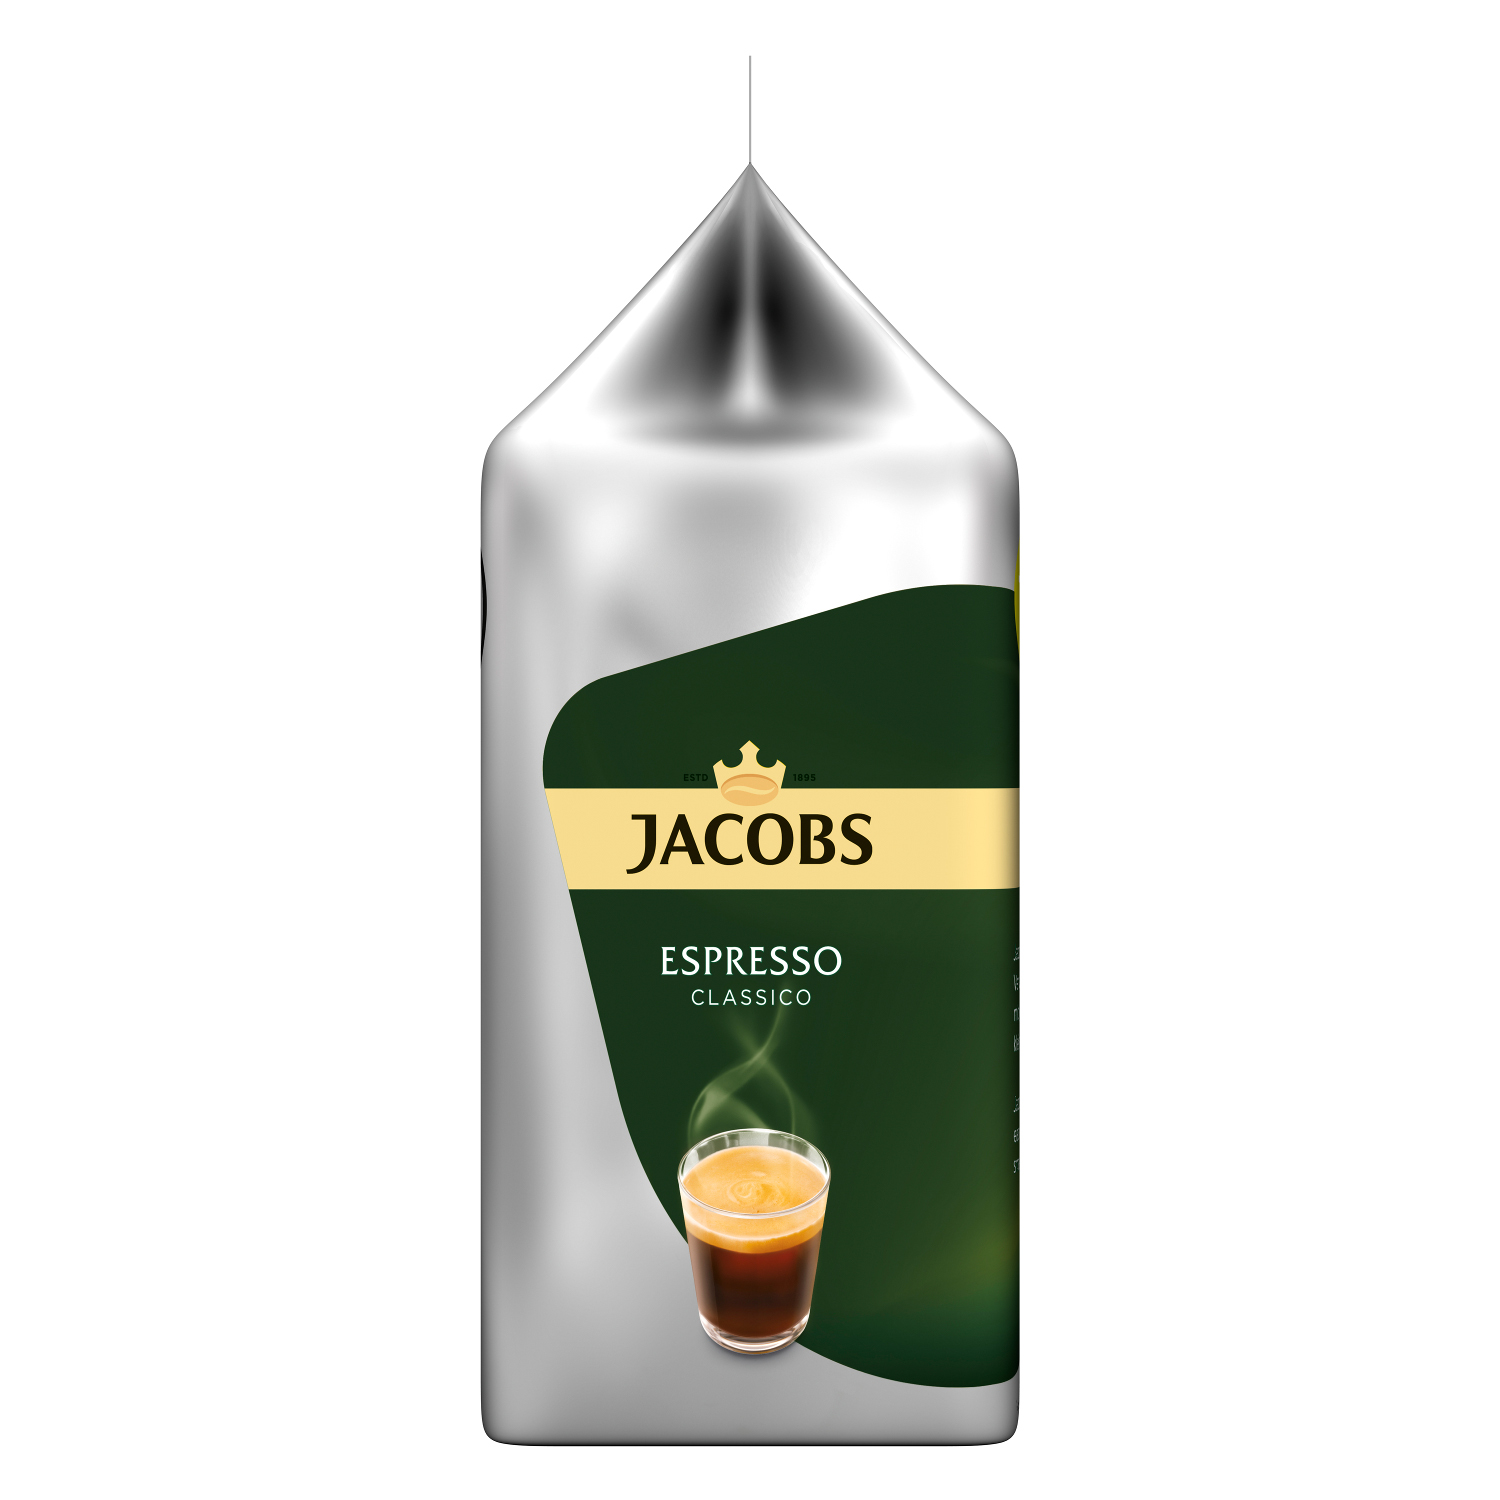 TASSIMO Jacobs Espresso 5 System)) 16 x Classico Kaffeekapseln T Maschine (T-Disc Getränke Discs (Tassimo